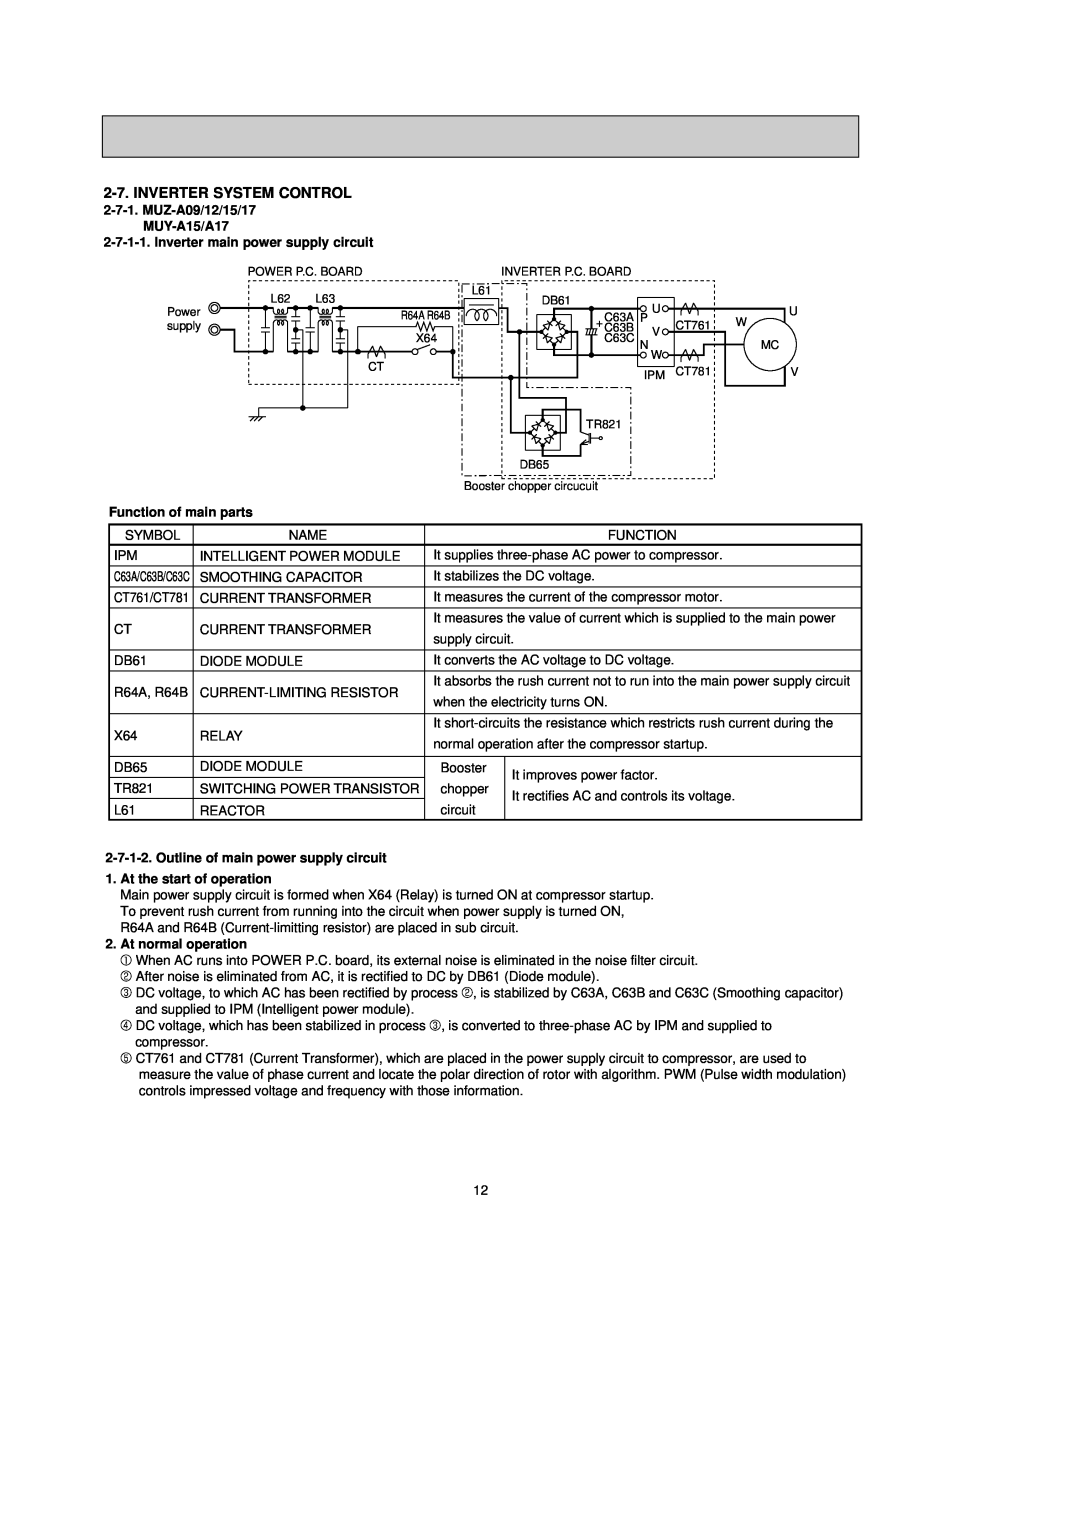 Mitsubishi Electronics MSZ-ANA Inverter System Control, MUZ-A09/12/15/17 MUY-A15/A17, Inverter main power supply circuit 